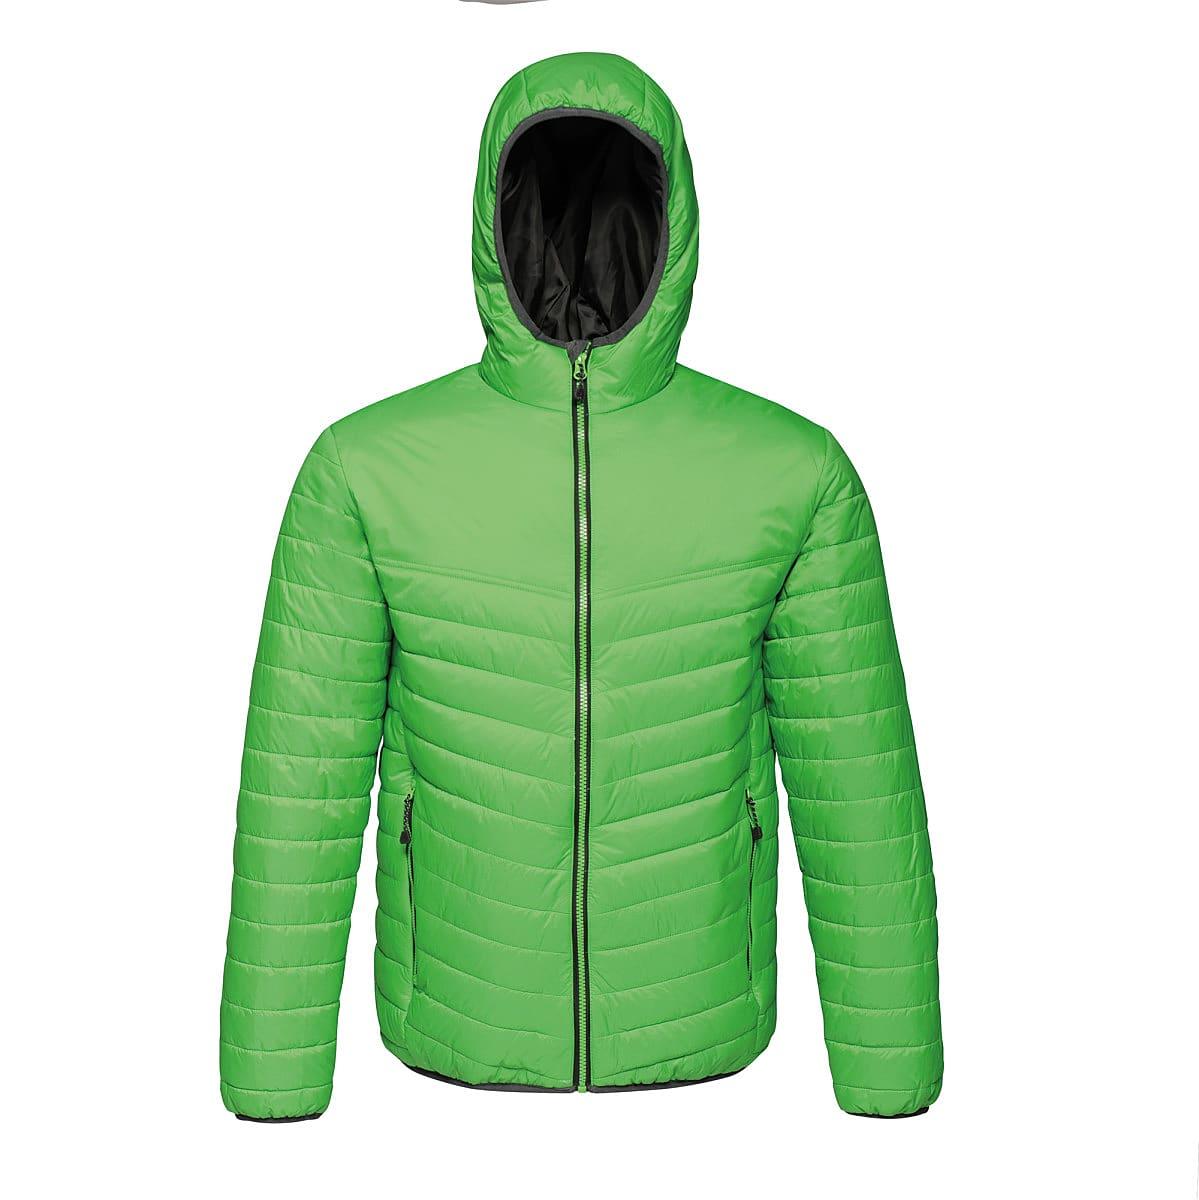 Regatta Mens Acadia II Jacket in Extreme Green / Black (Product Code: TRA420)